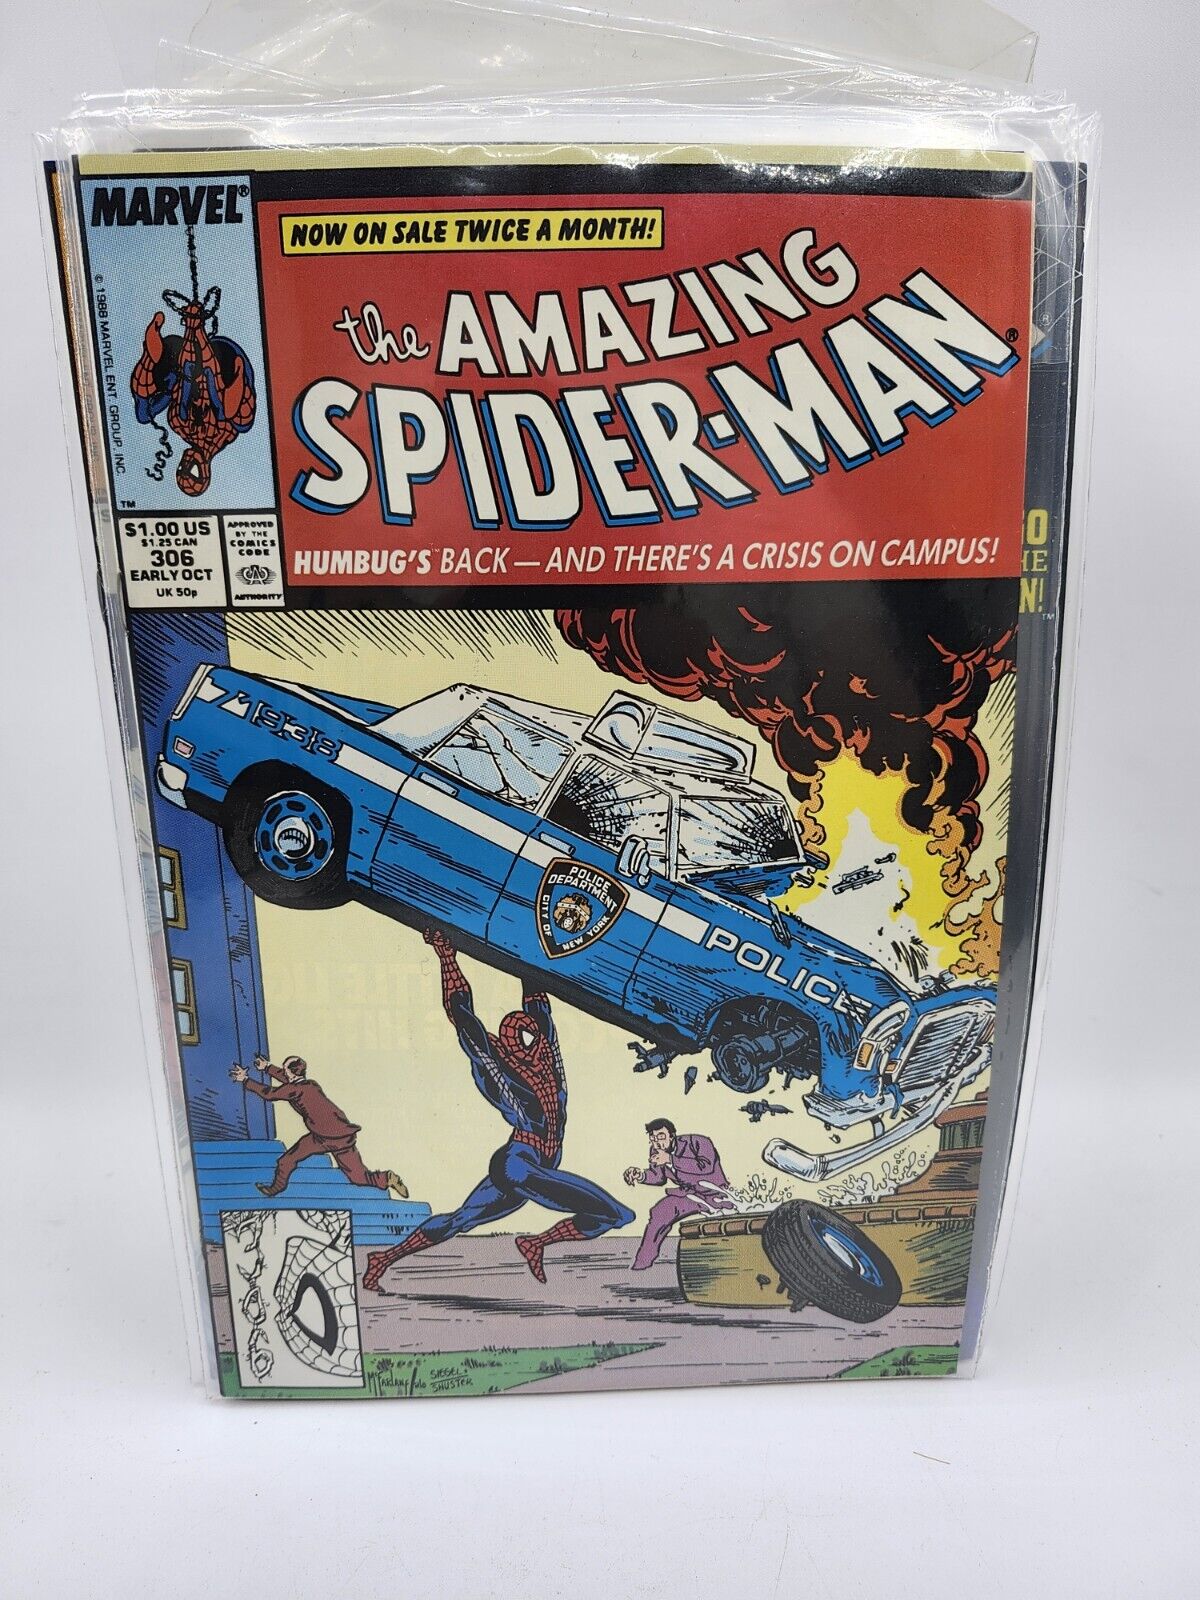 1988 Marvel Comics The Amazing Spider-Man #306 Action Comics #1 Homage